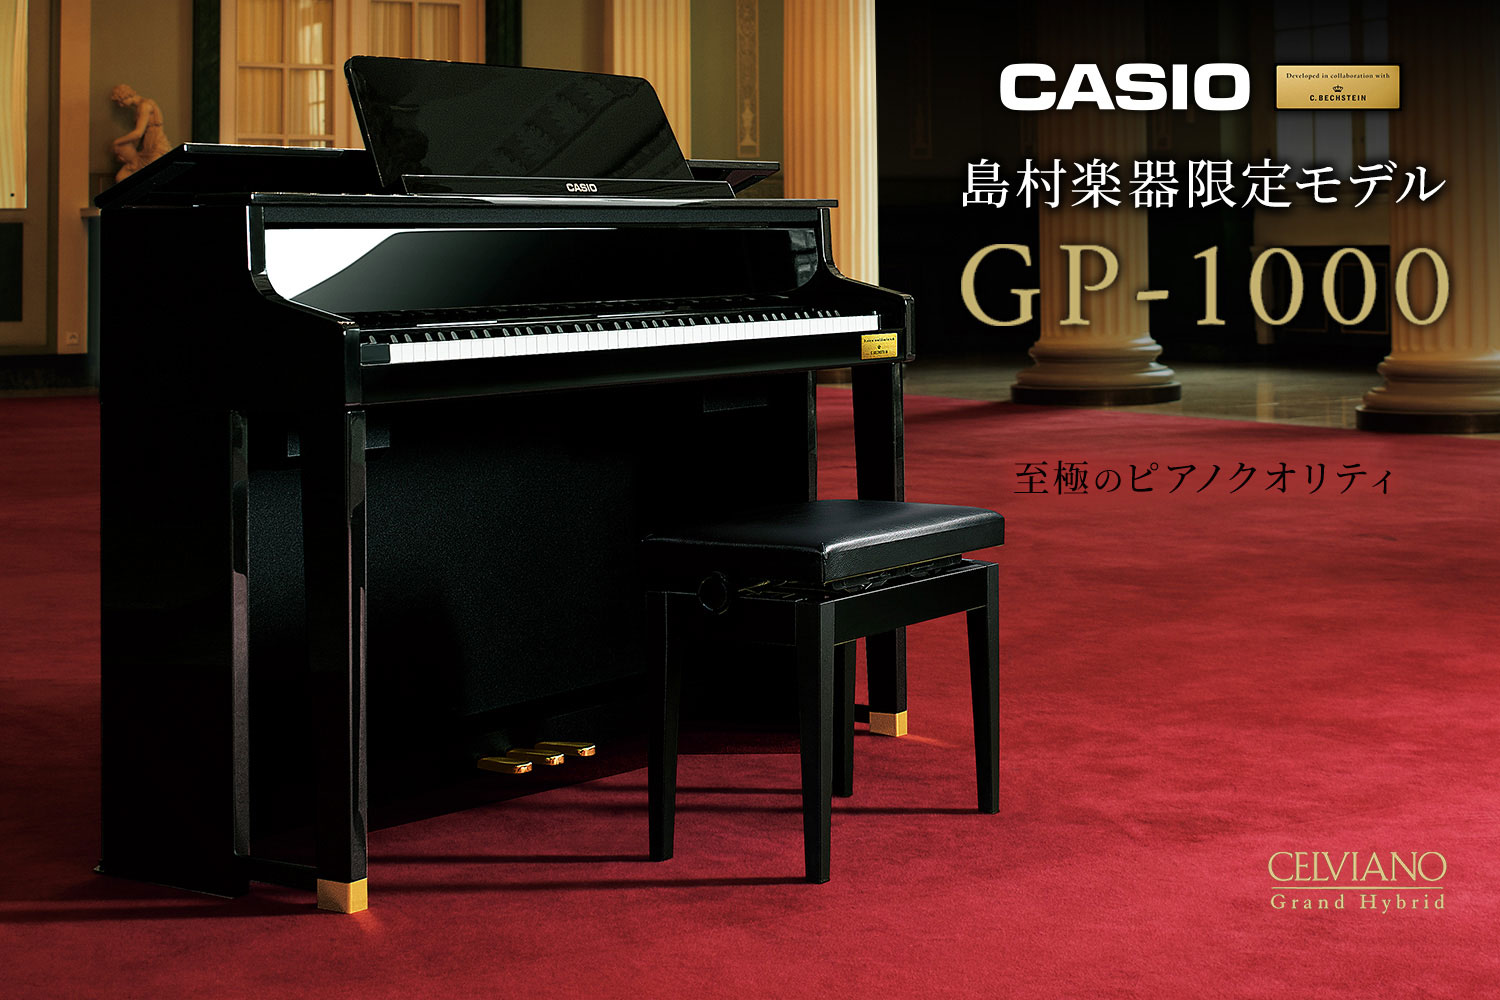 CASIO×C.ベヒシュタイン コラボレーション電子ピアノ島村楽器限定モデル「GP-1000」のご紹介！